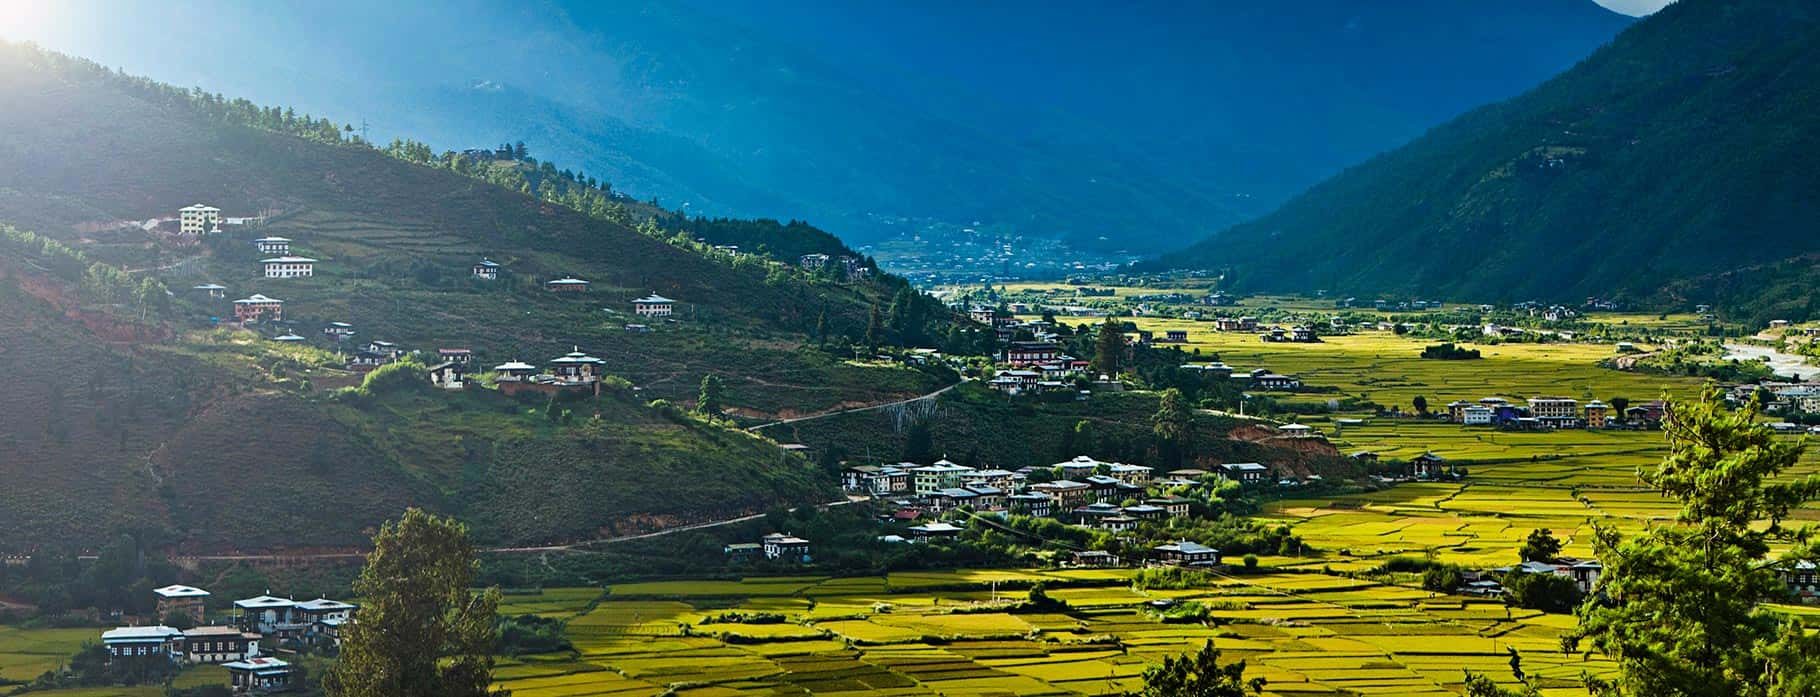 8 DAYS BIKING THE DRAGON KINGDOM OF BHUTAN